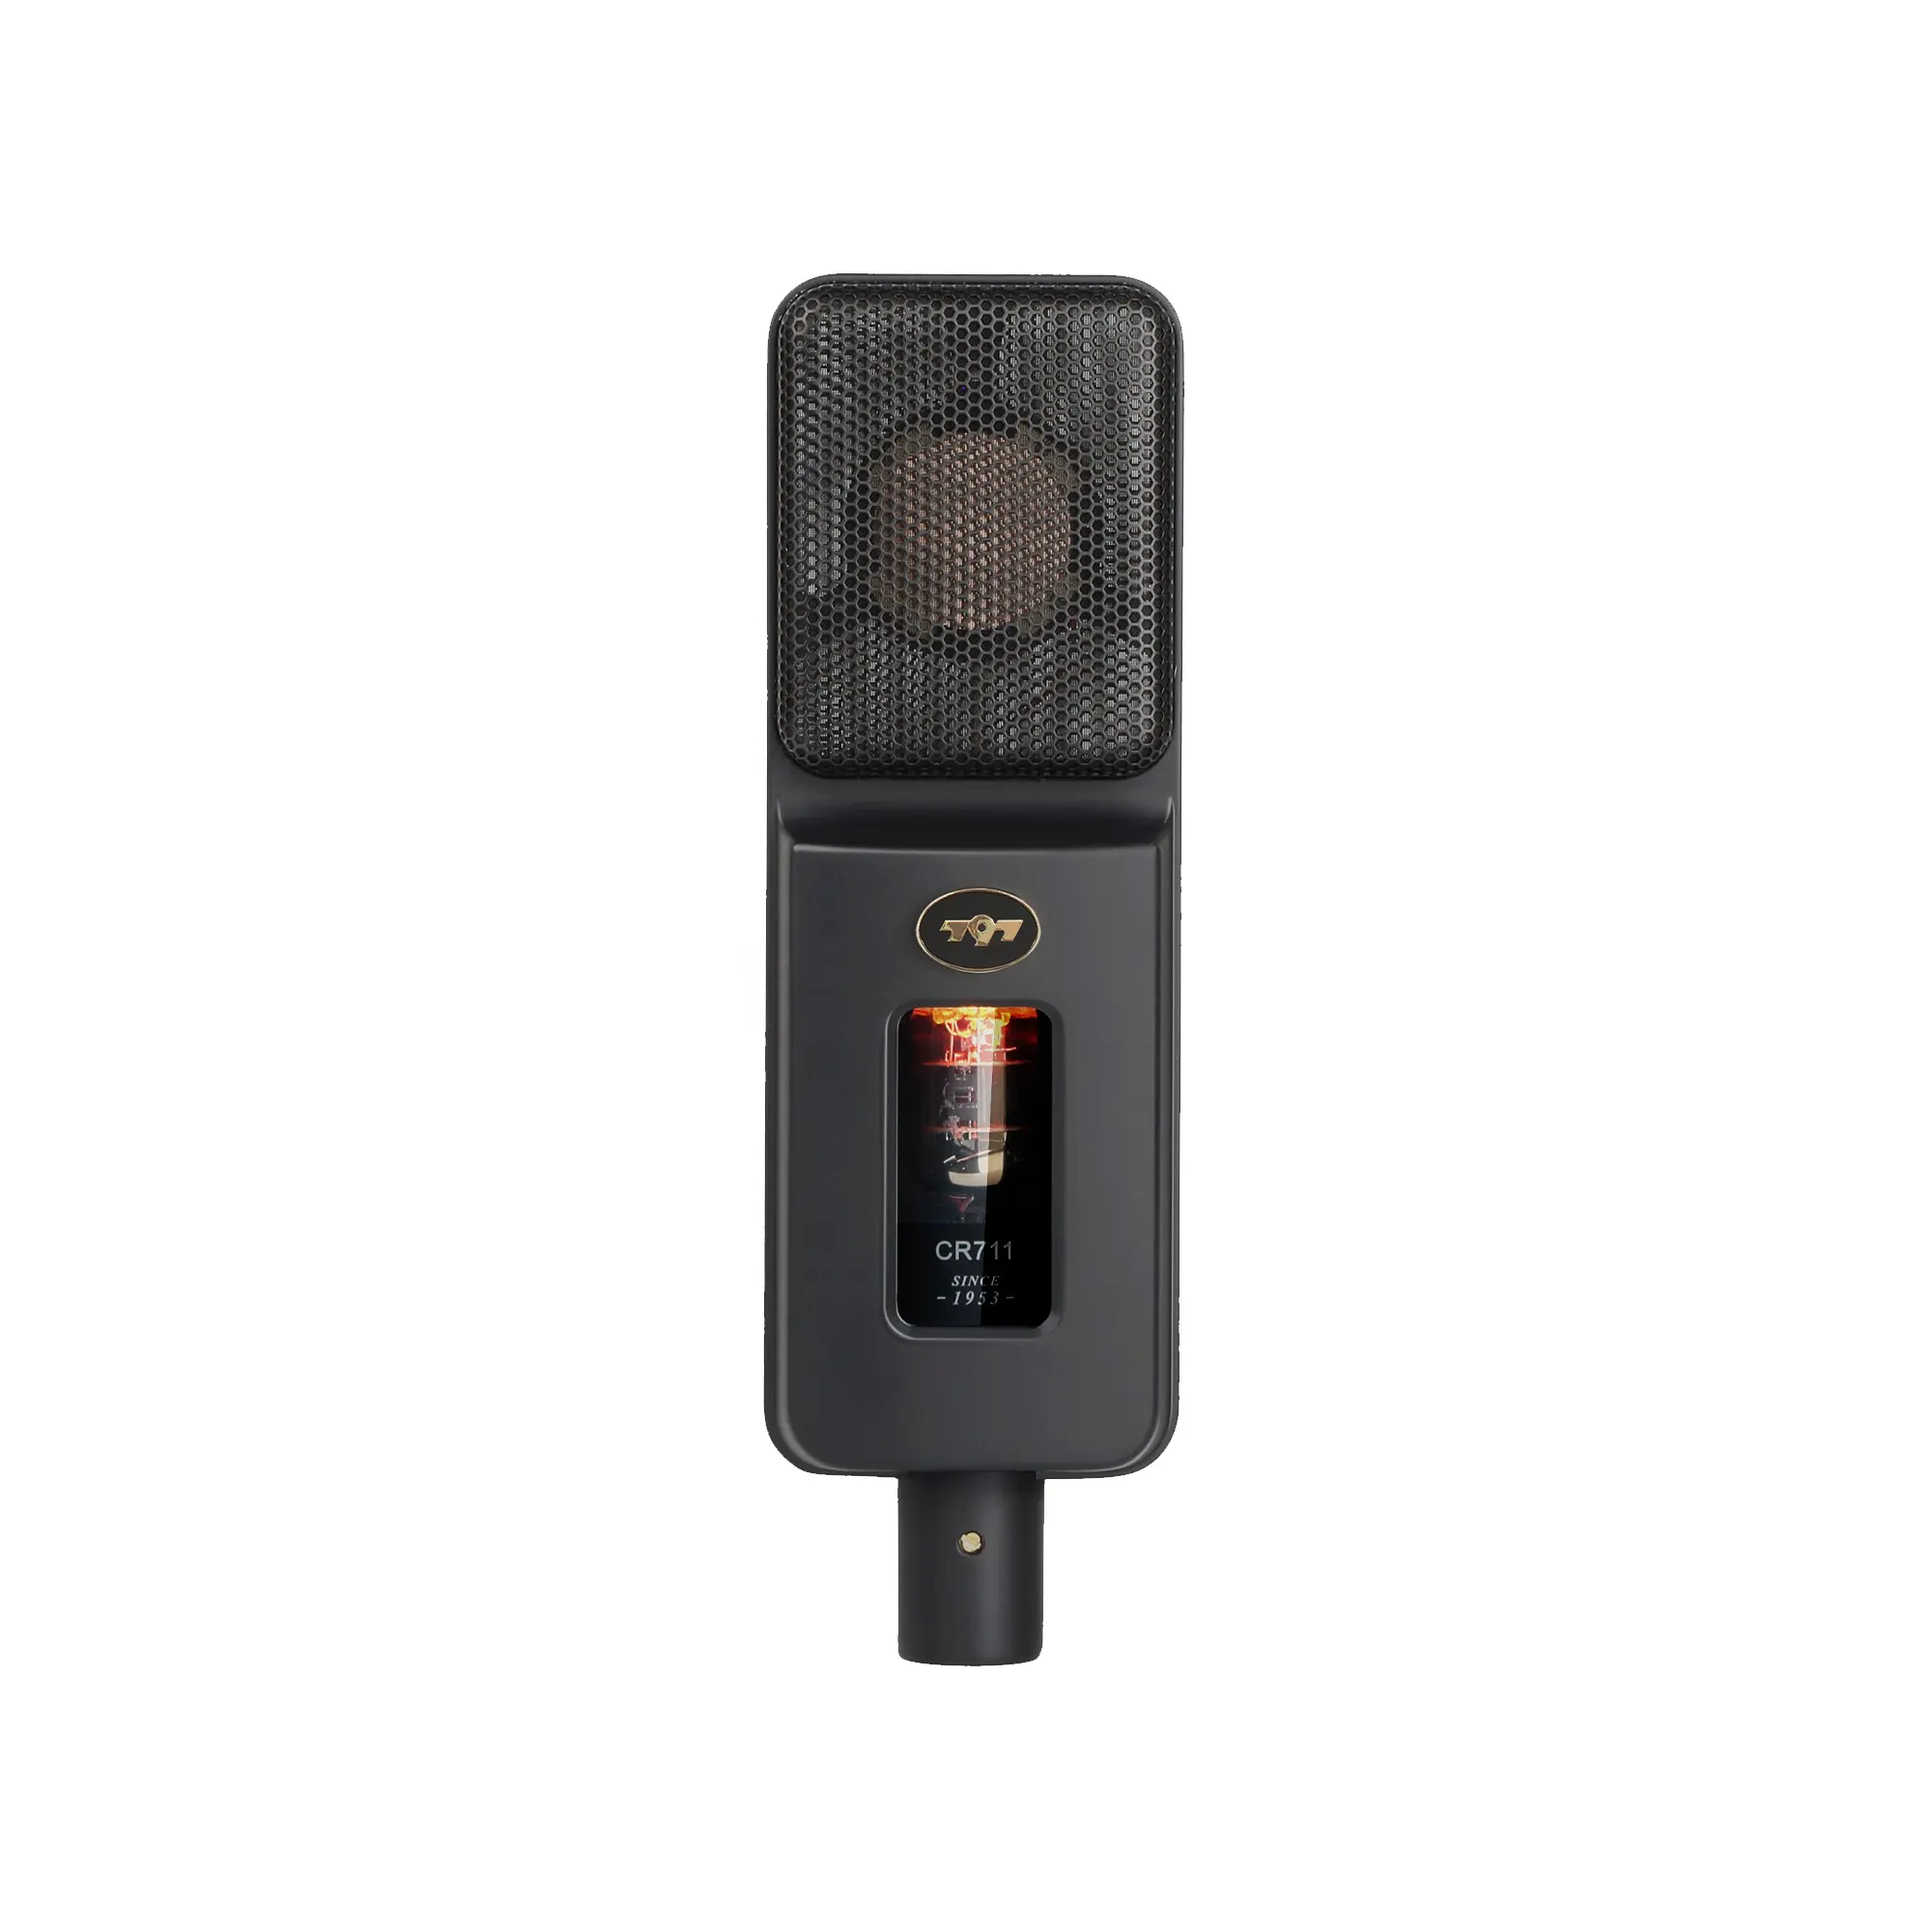 Mikrofon kondensor vokal berdiri XLR USB/3-pin nama merek grosir ATCR01 Audio 797 disesuaikan pabrik Tiongkok